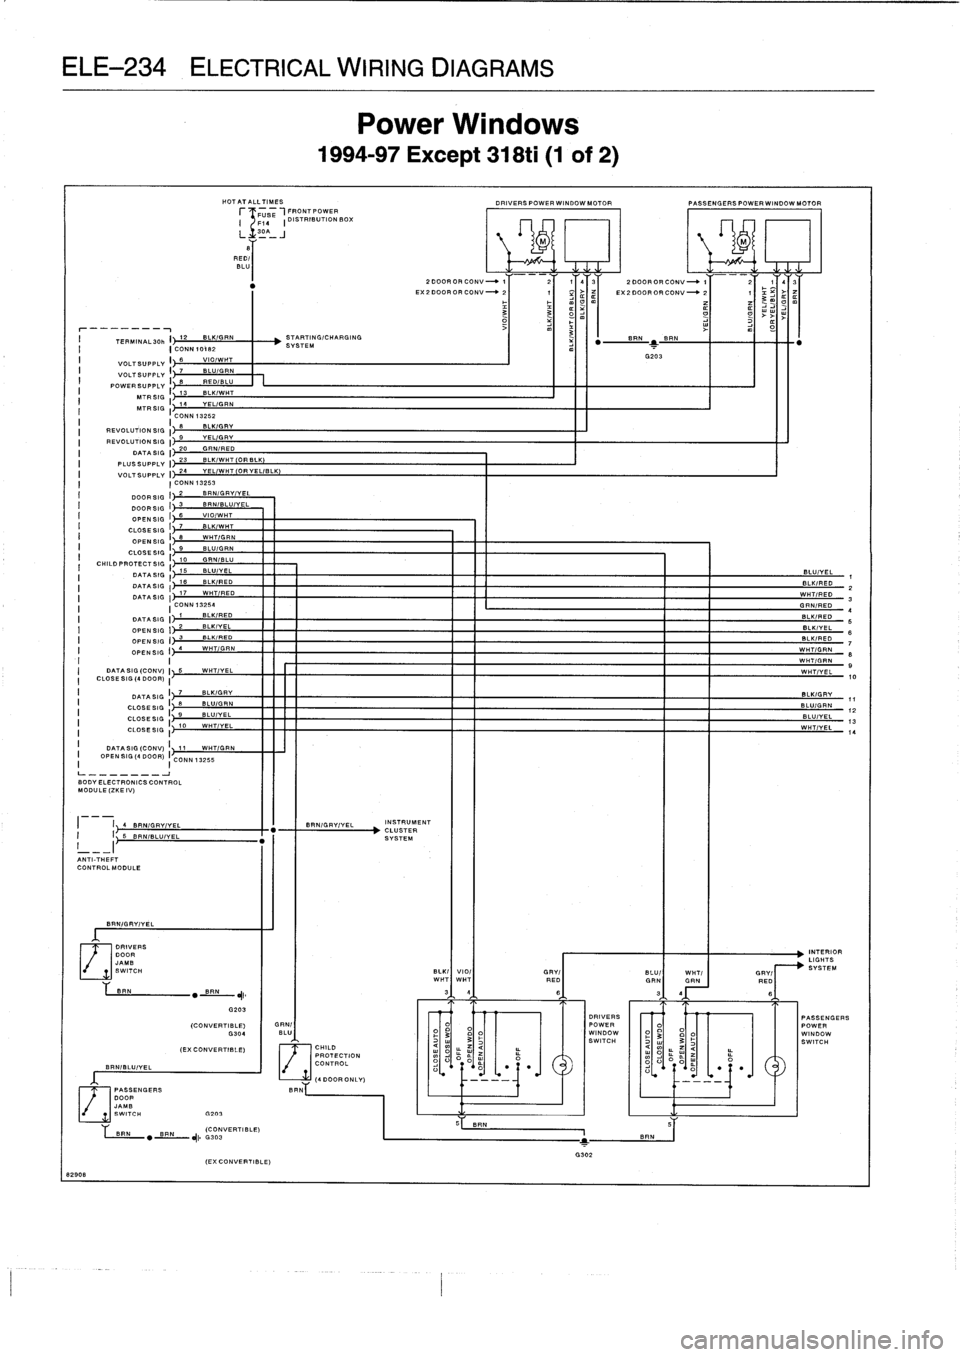 BMW 323i 1993 E36 Workshop Manual 
ELE-234
ELECTRICAL
WIRING
DIAGRAMS

82908

L
1
3
--J
8
RED/
BLU

I

	

TERMINAL30H
I
12

	

BLKIGRN

	

STARTING/CHARGING
I

	

ICONN10182

	

SYSTEM

BLK/GRV
REVOLUTIONSIG
I~
~
9
REVOLUTIONSIG
I)
-
